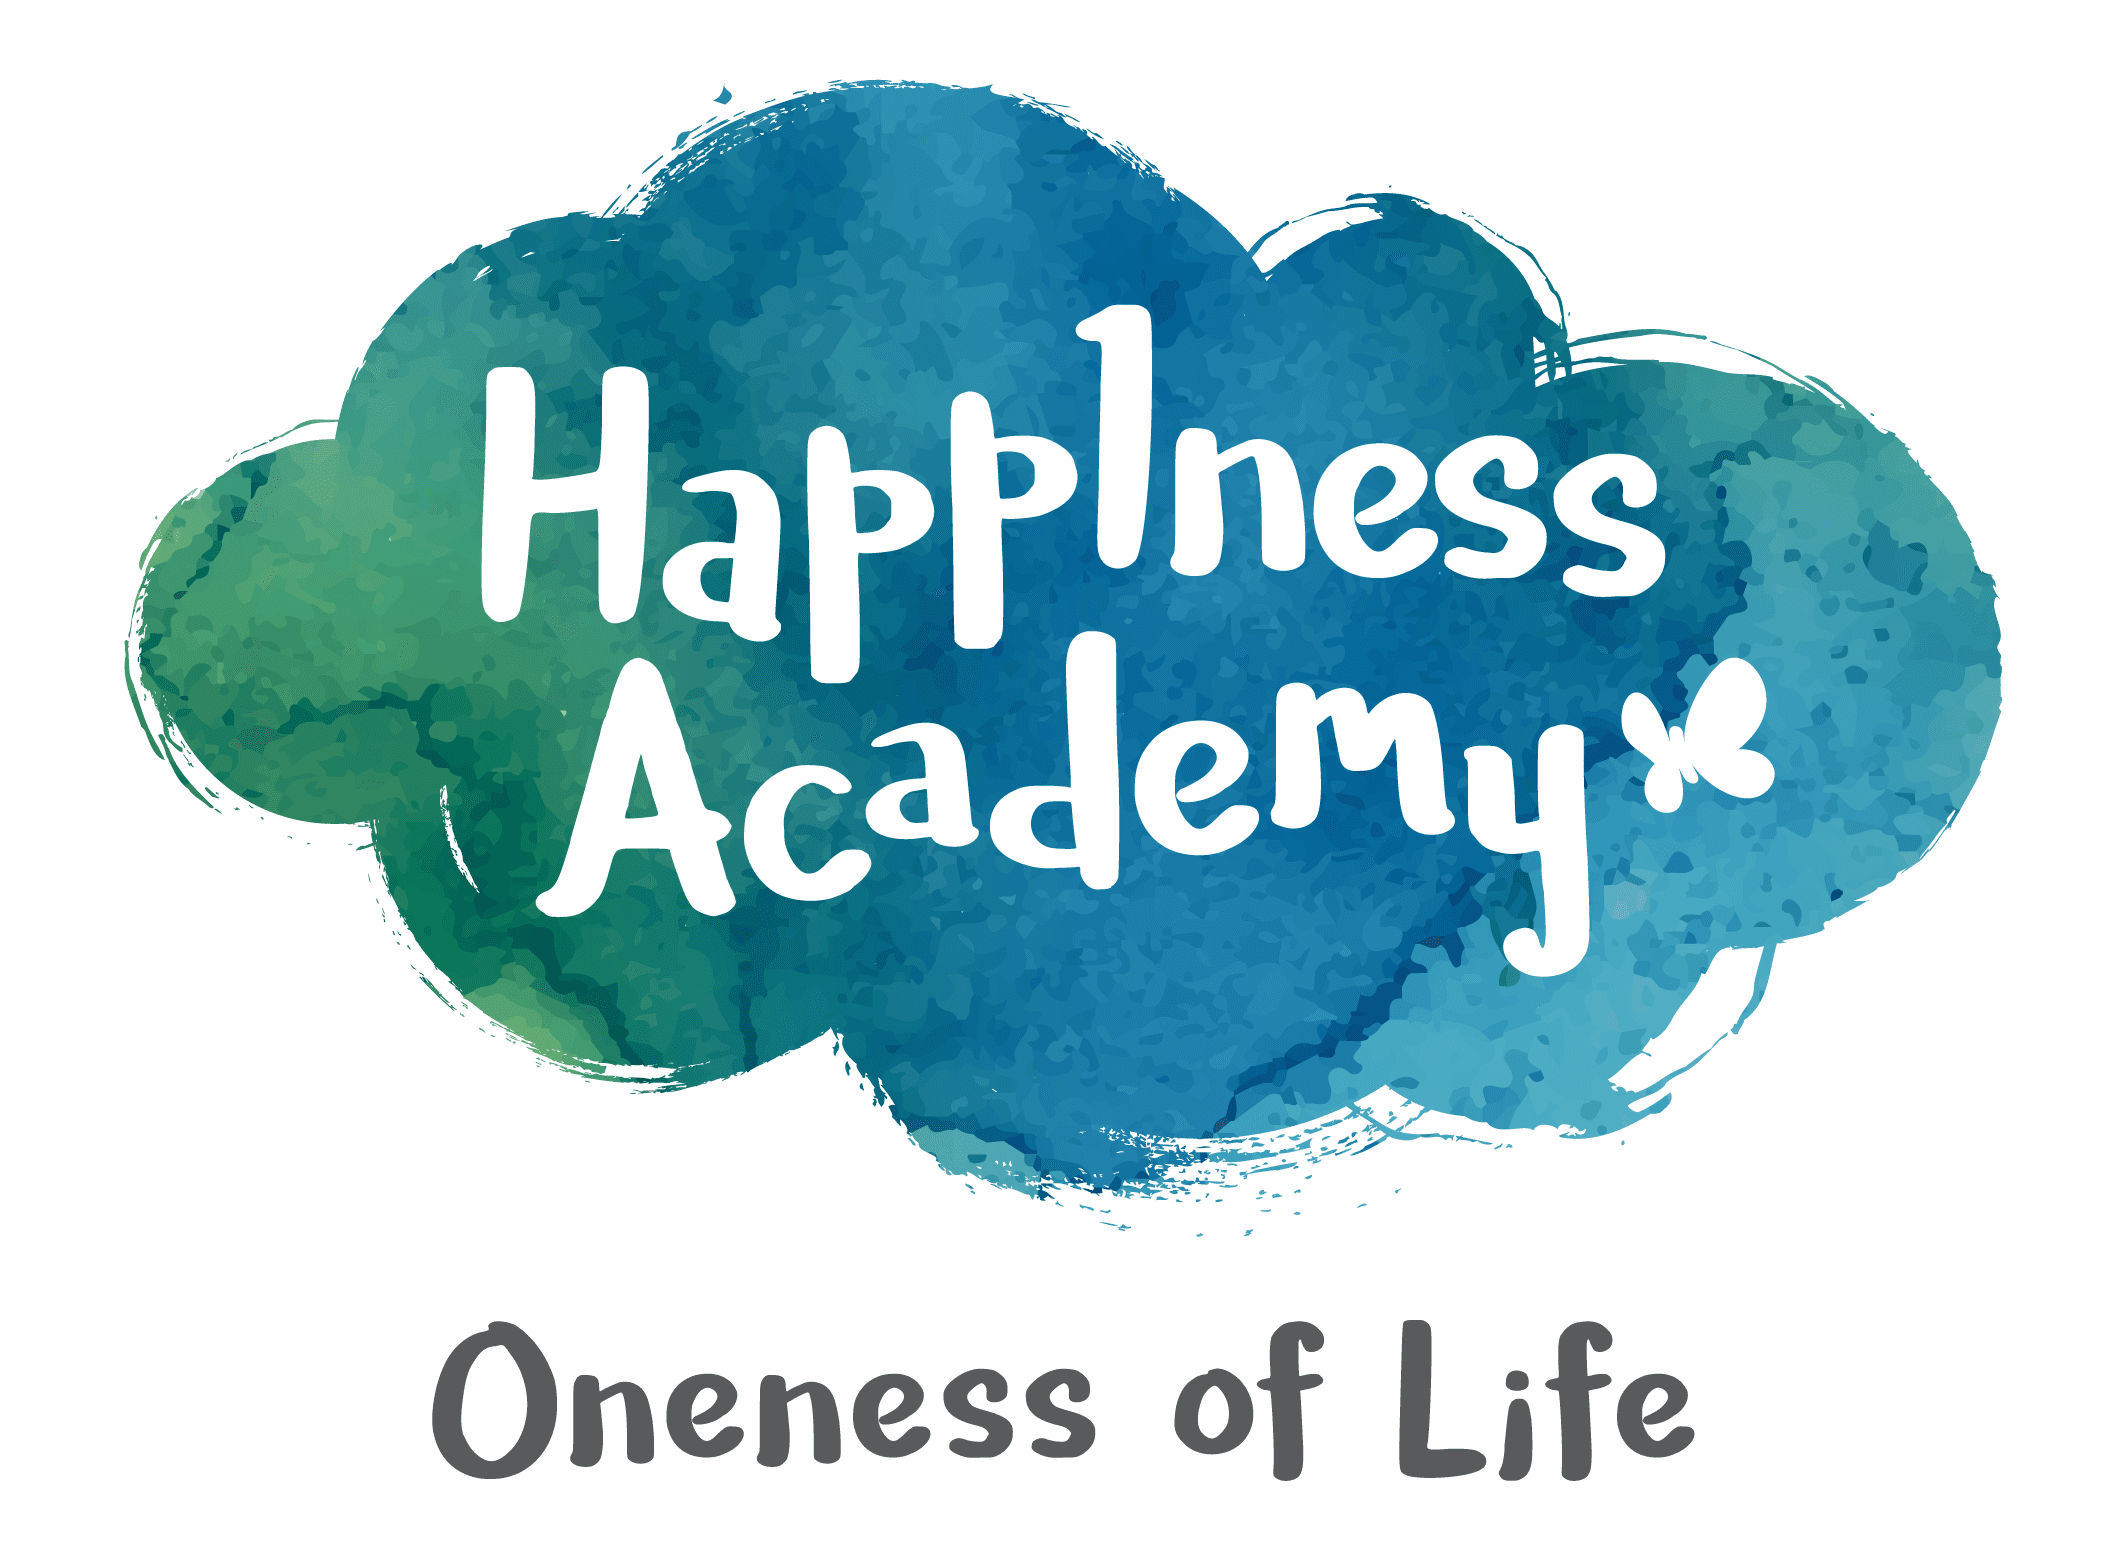 Happ1ness Academy